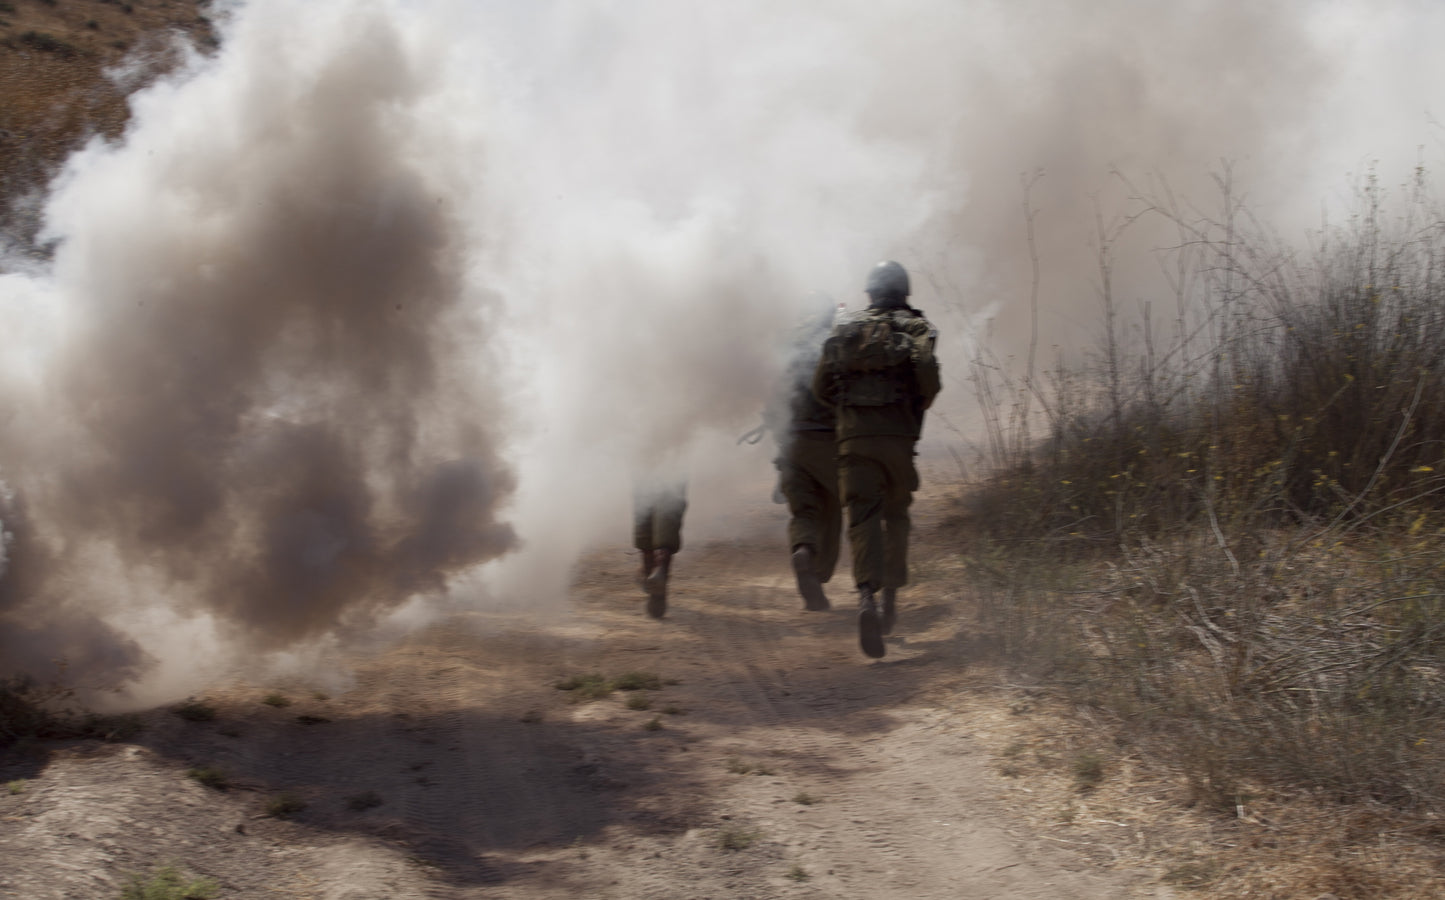 A soldier ran through thick smoke